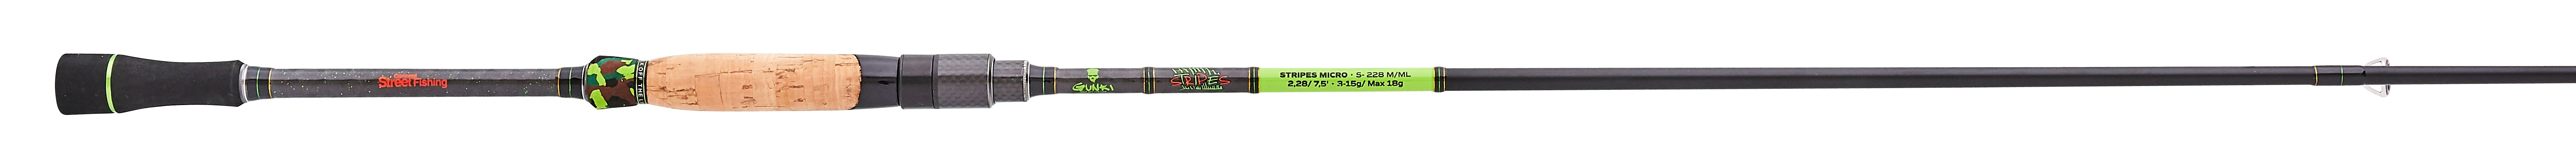 Gunki Stripes Micro S-228M/ML rod, 228cm, 3-15g, 2-part